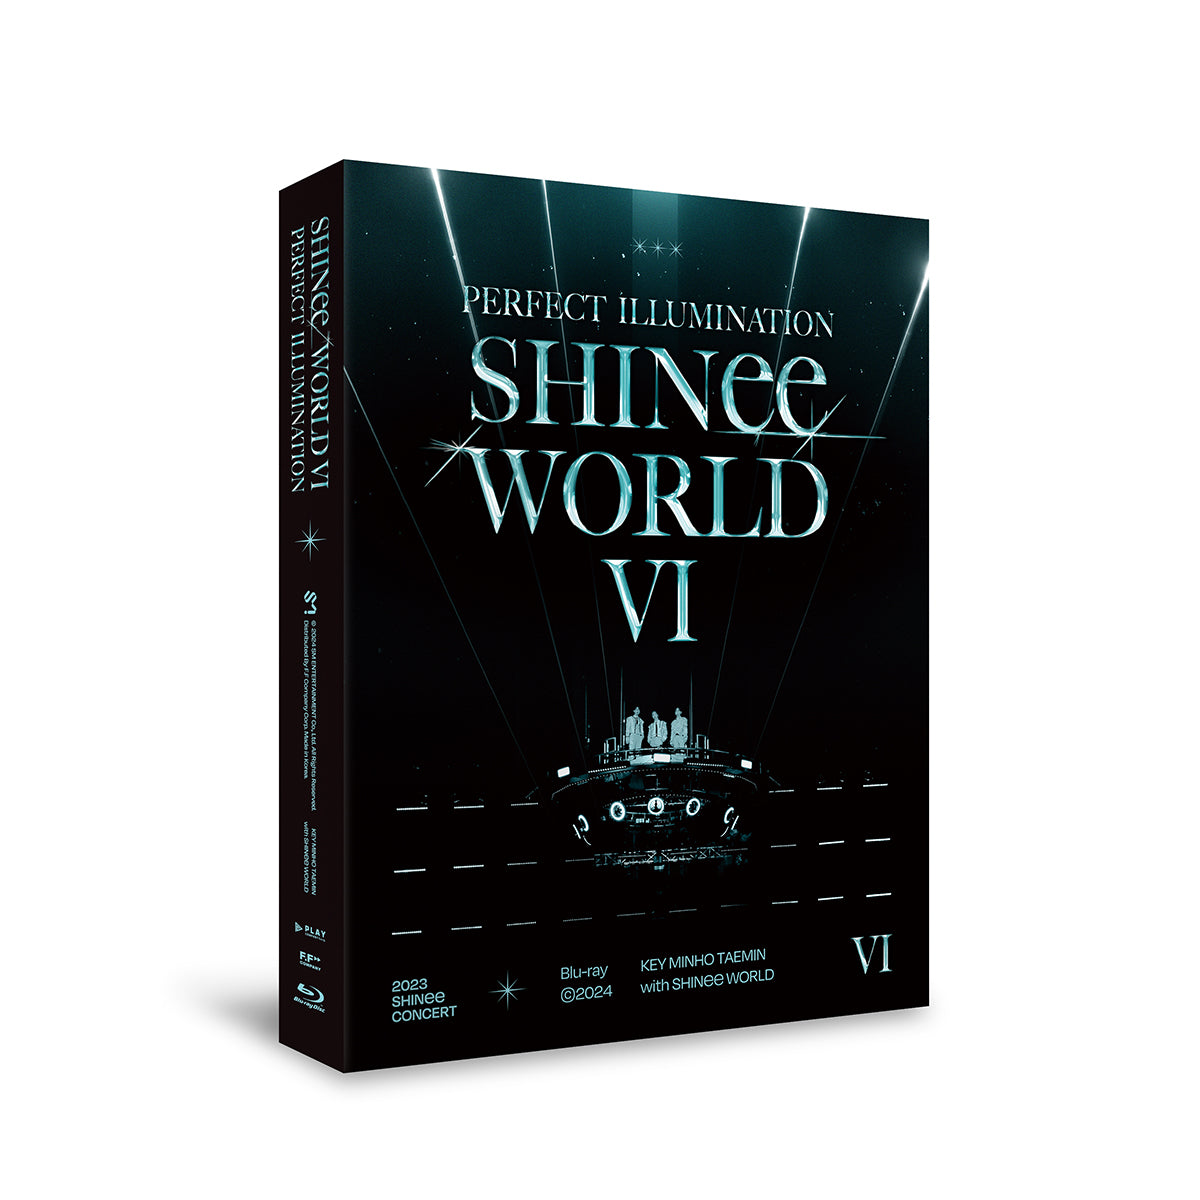 SHINee - SHINee WORLD VI [PERFECT ILLUMINATION] in SEOUL Blu-ray [PRE-ORDER]